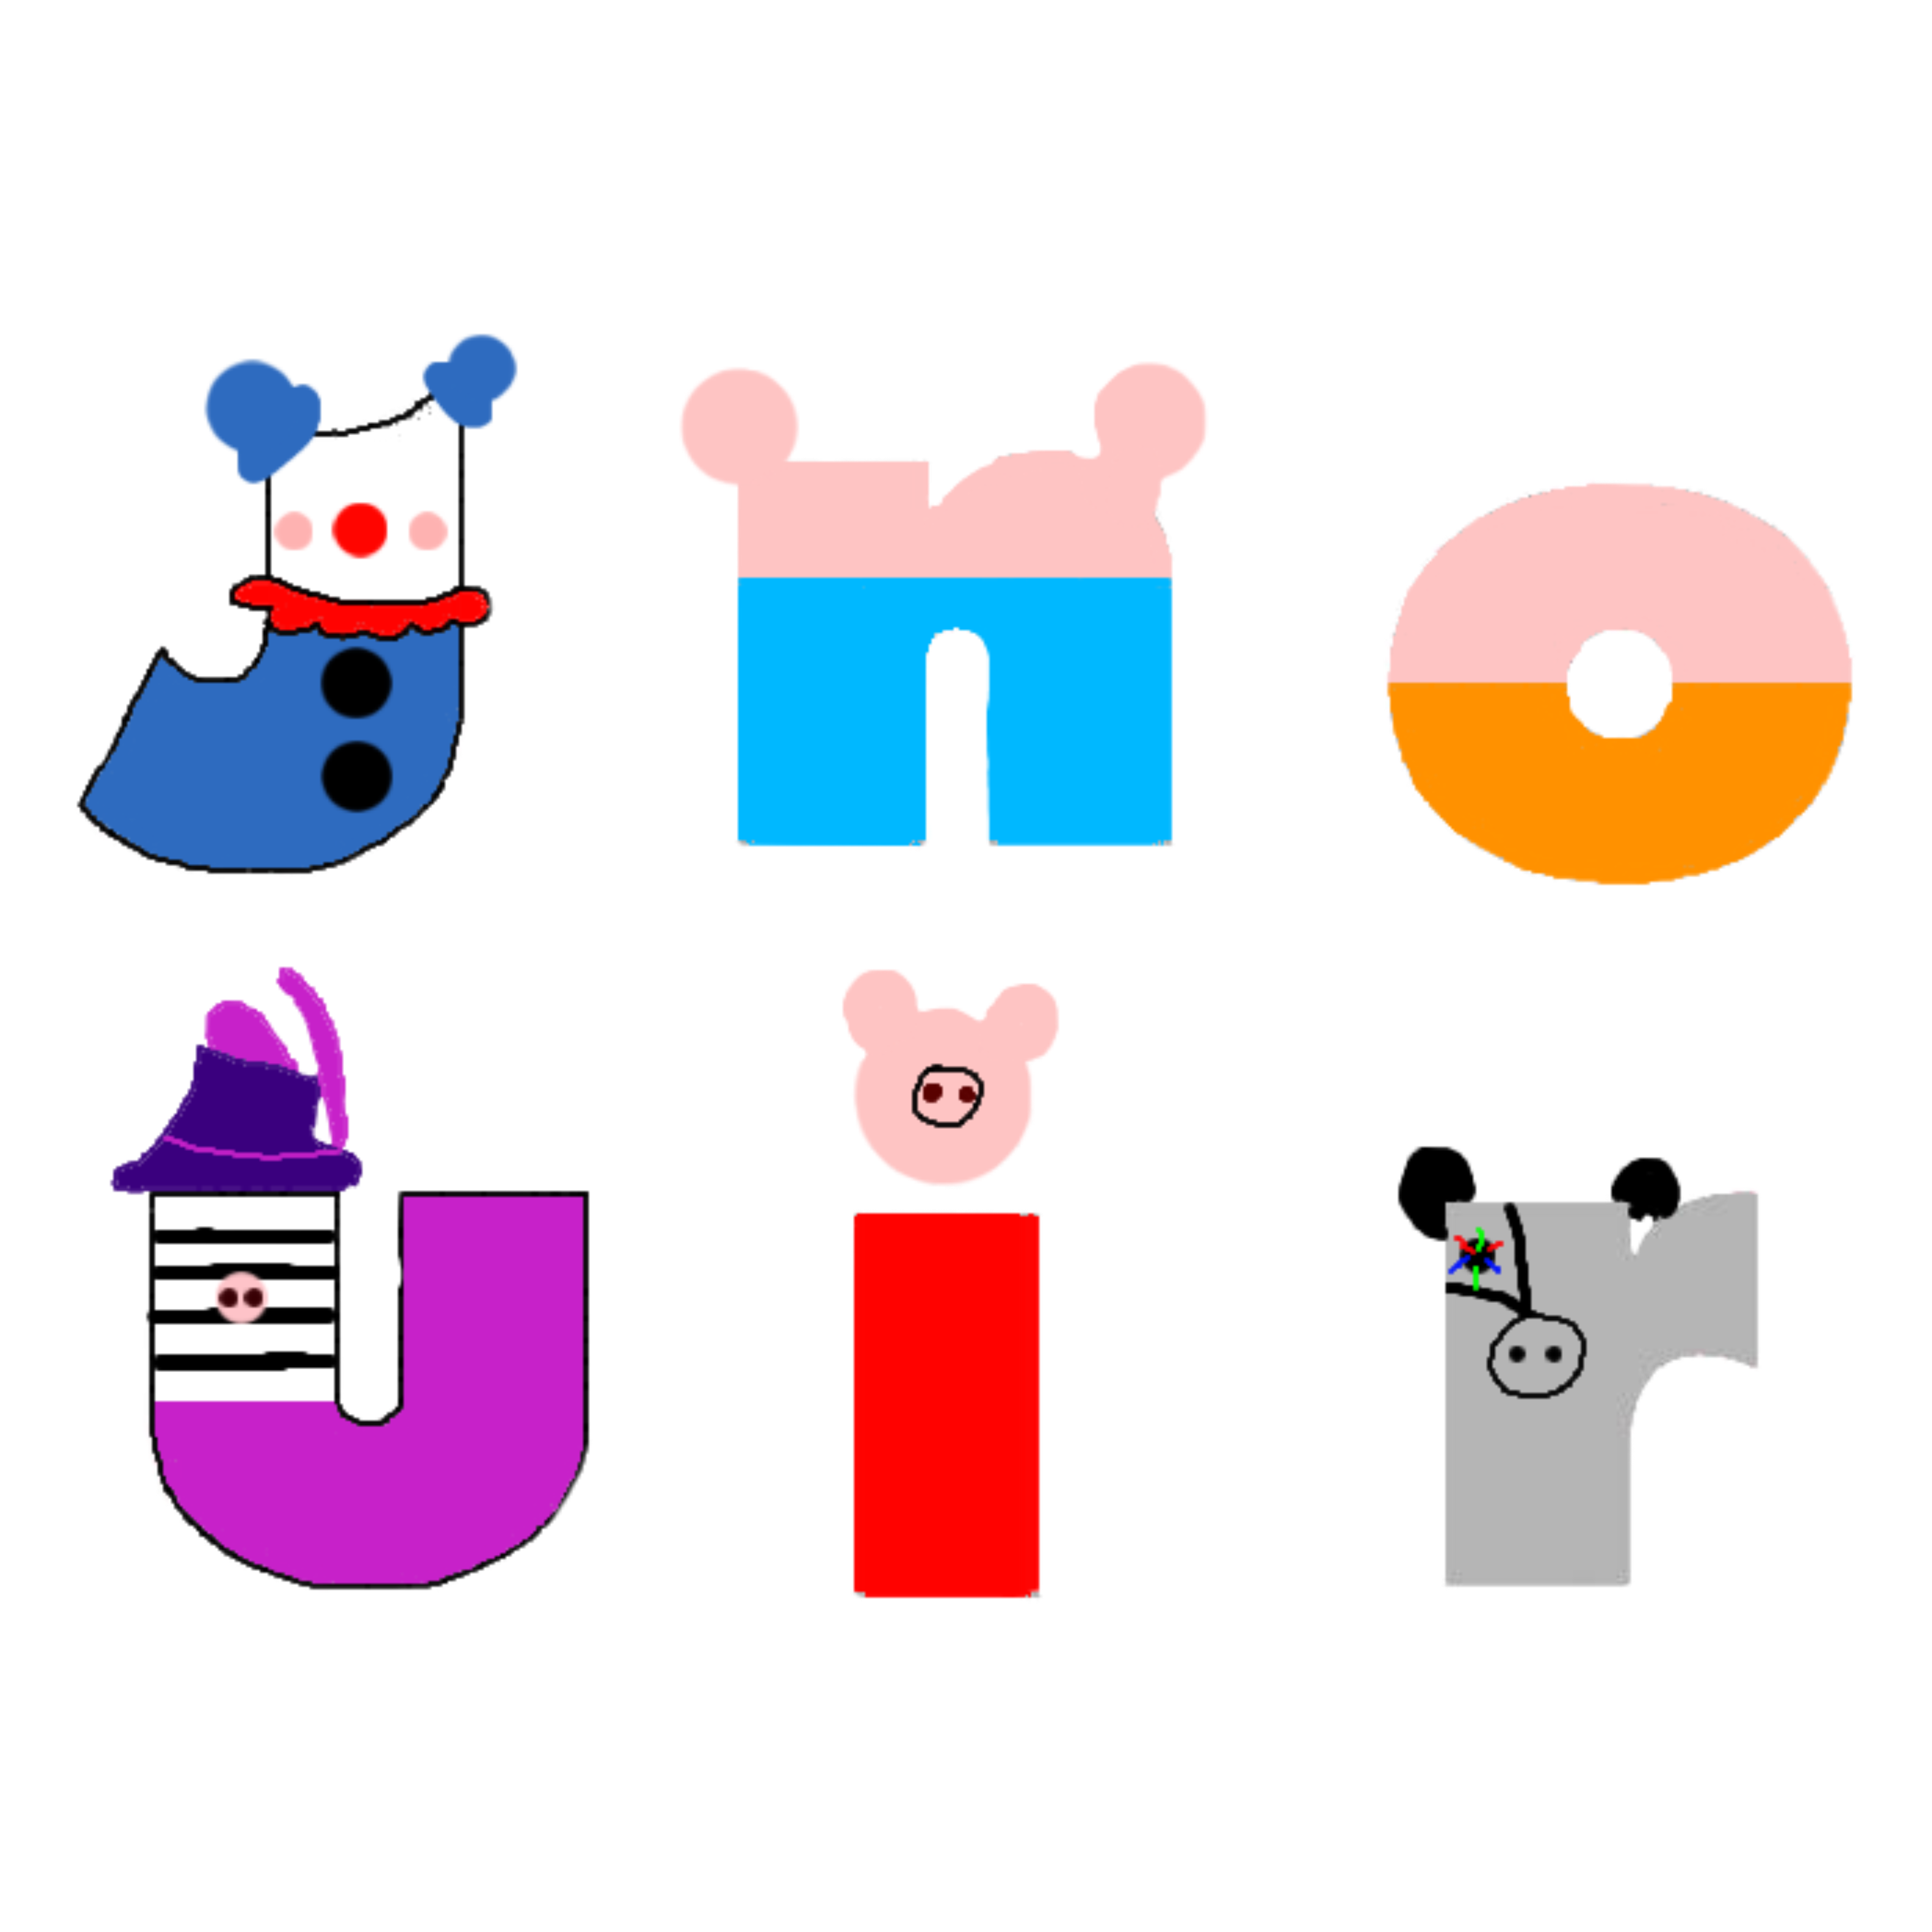 Resources of Disney Junior Bumper Piggy Roblox by Kalvin02 on DeviantArt